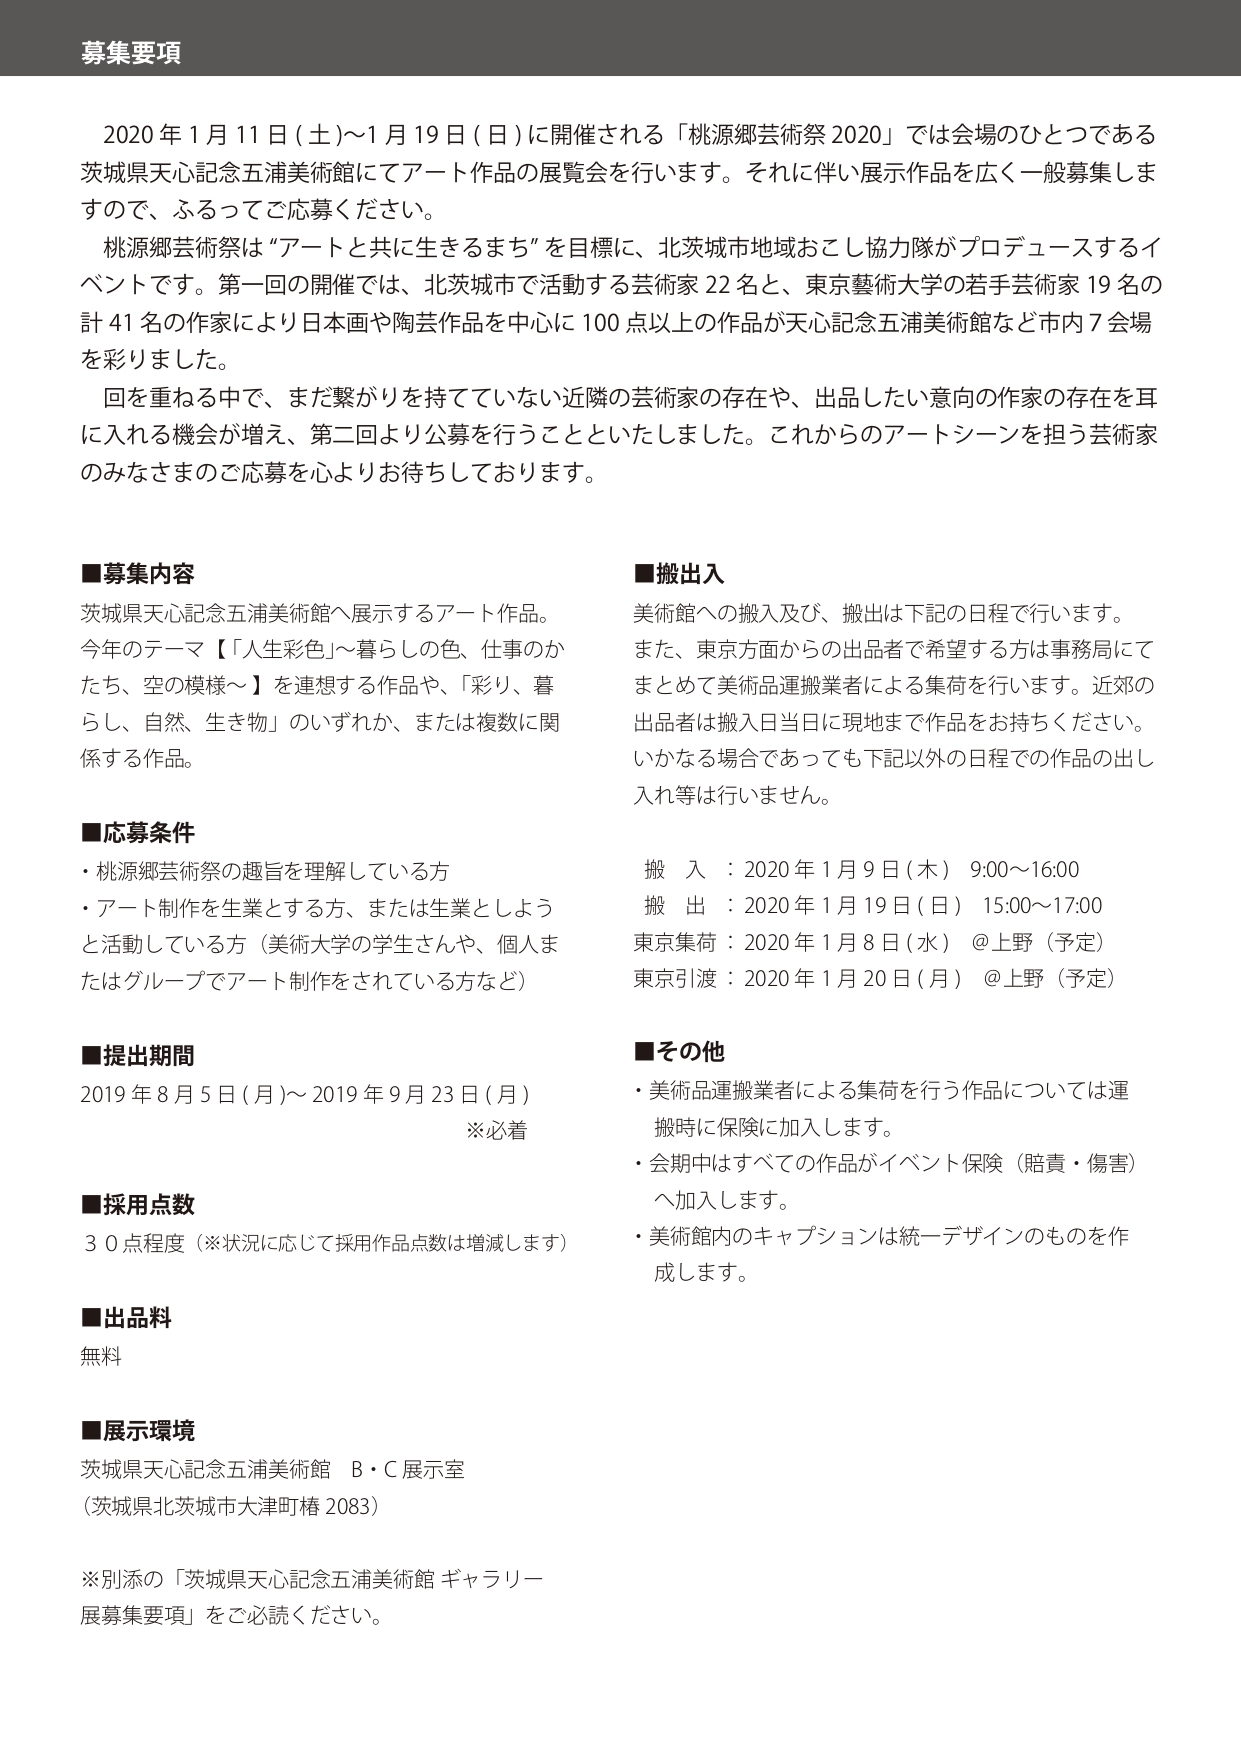 01_美術館展示アーティスト公募_募集要項(印刷版).jpg